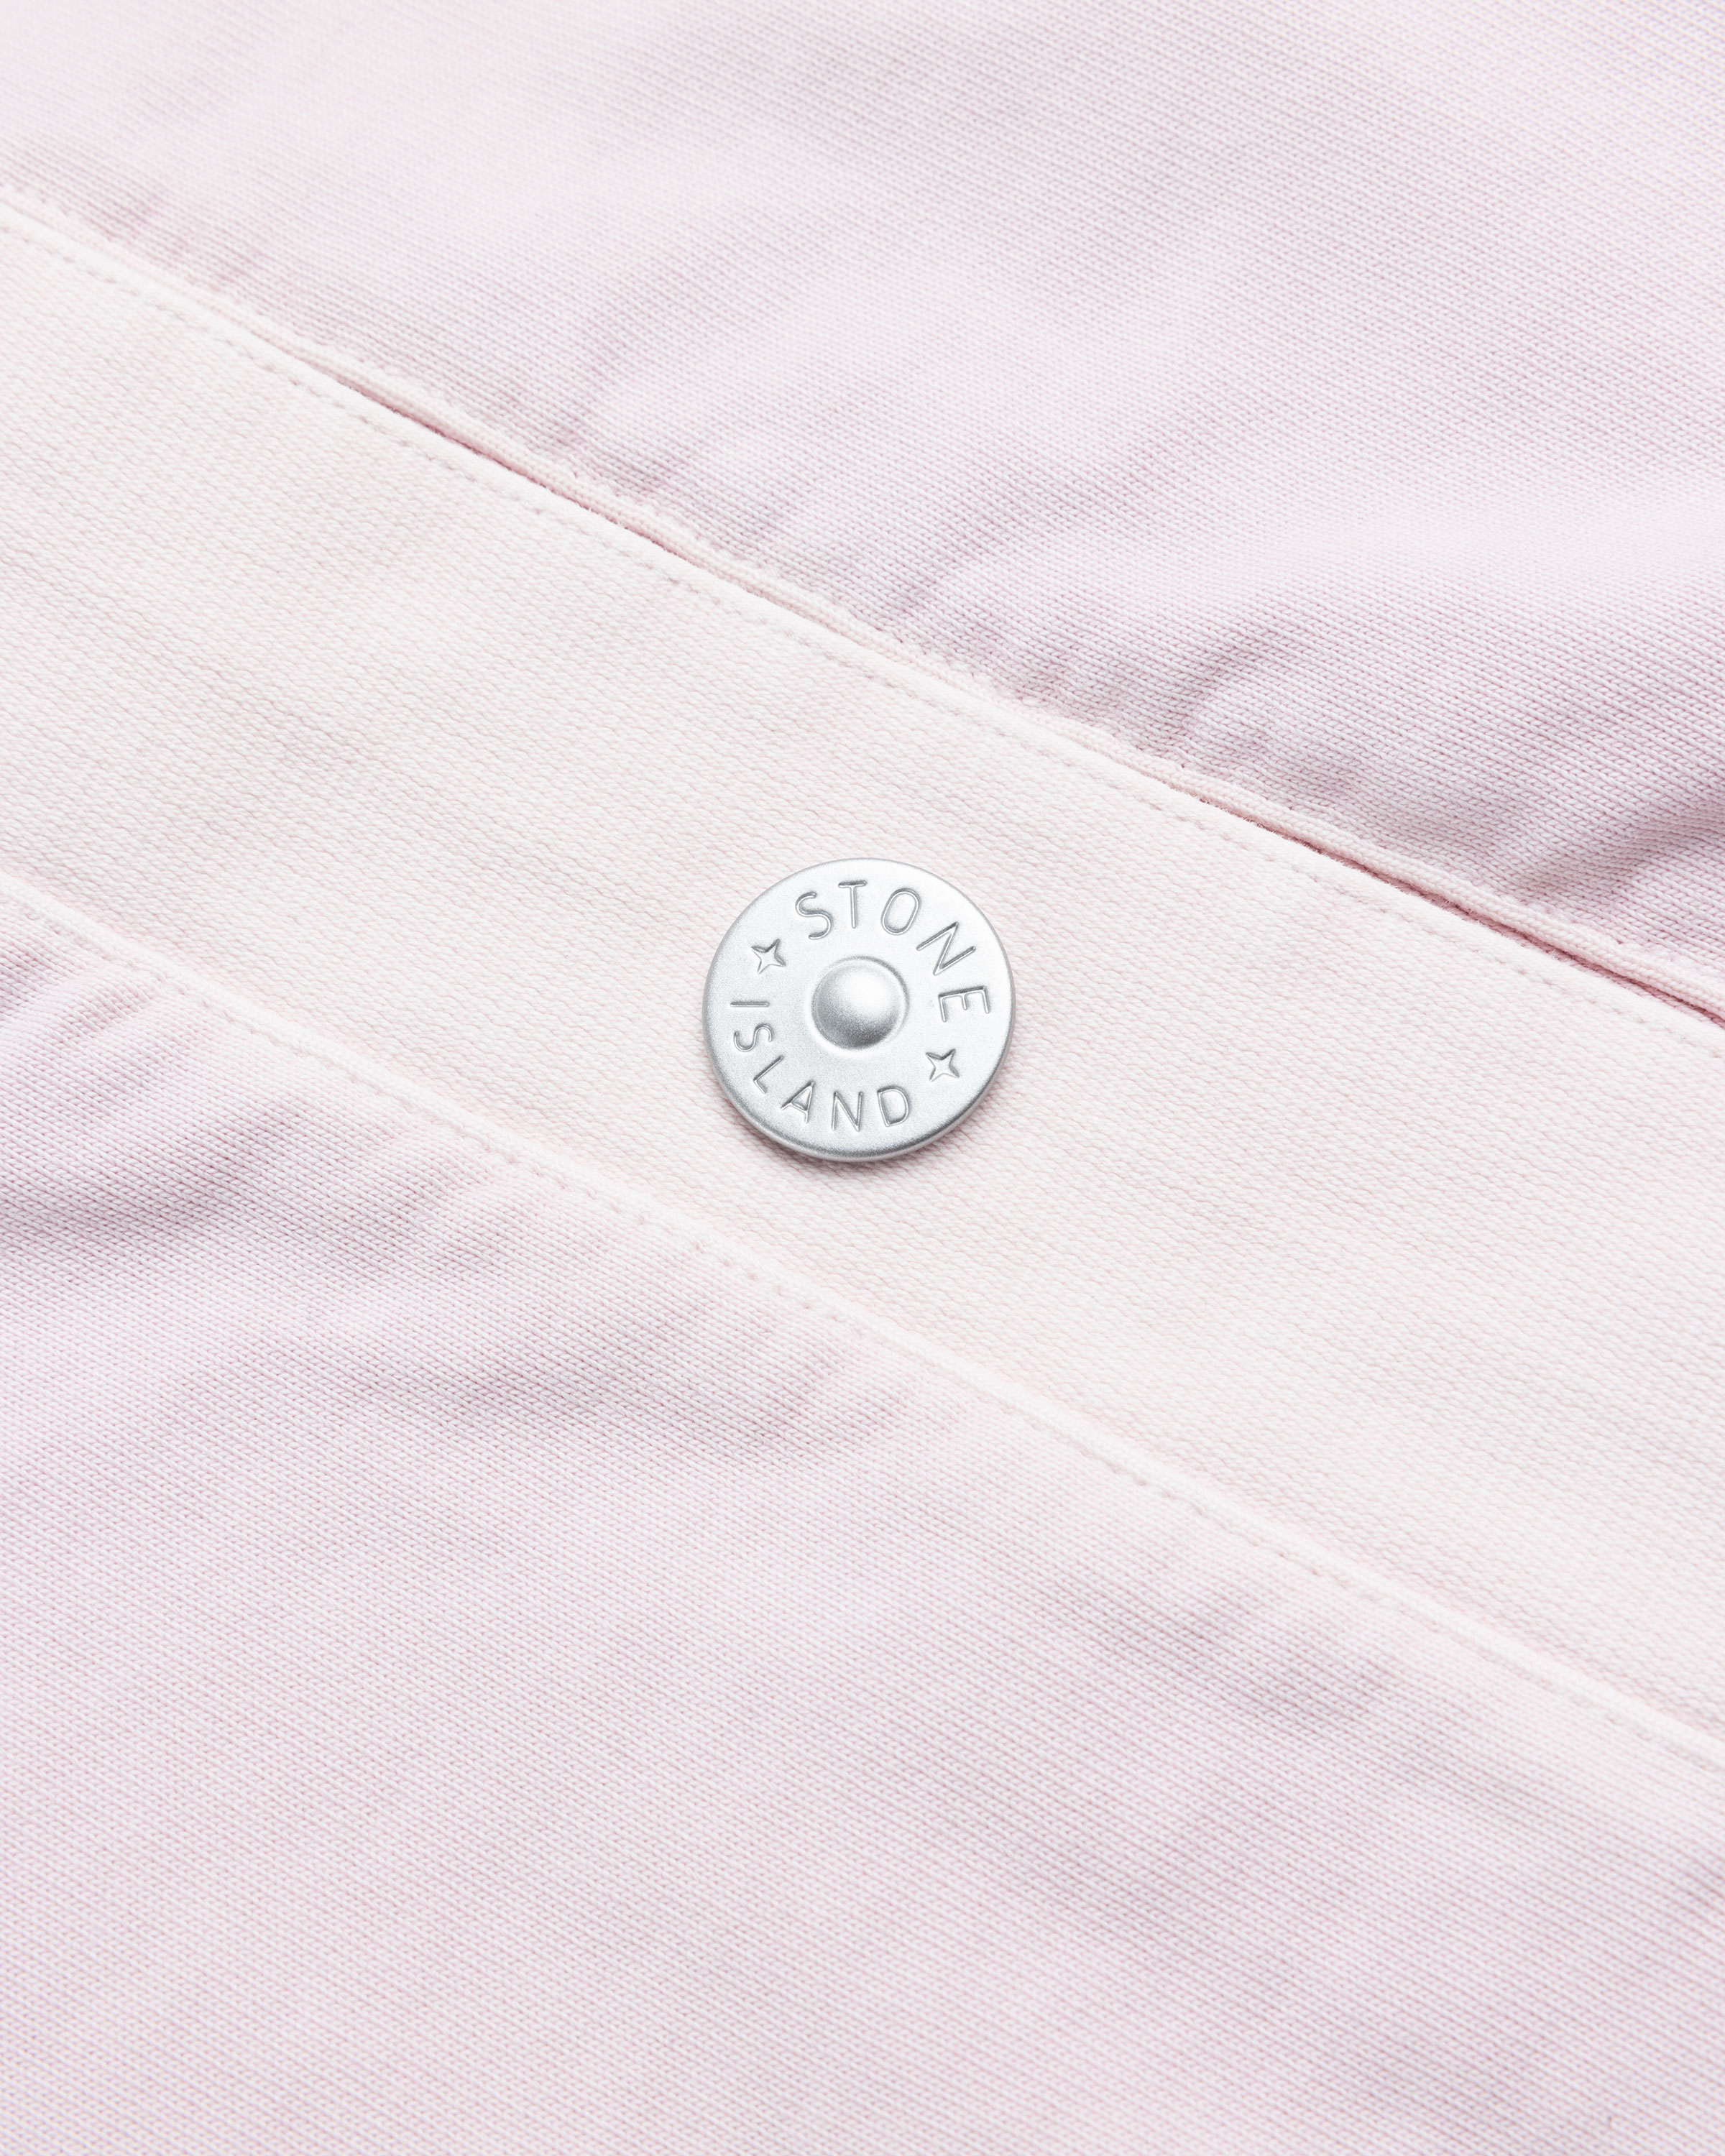 Stone Island – Marina Hoodie Pink - Knitwear - Pink - Image 5